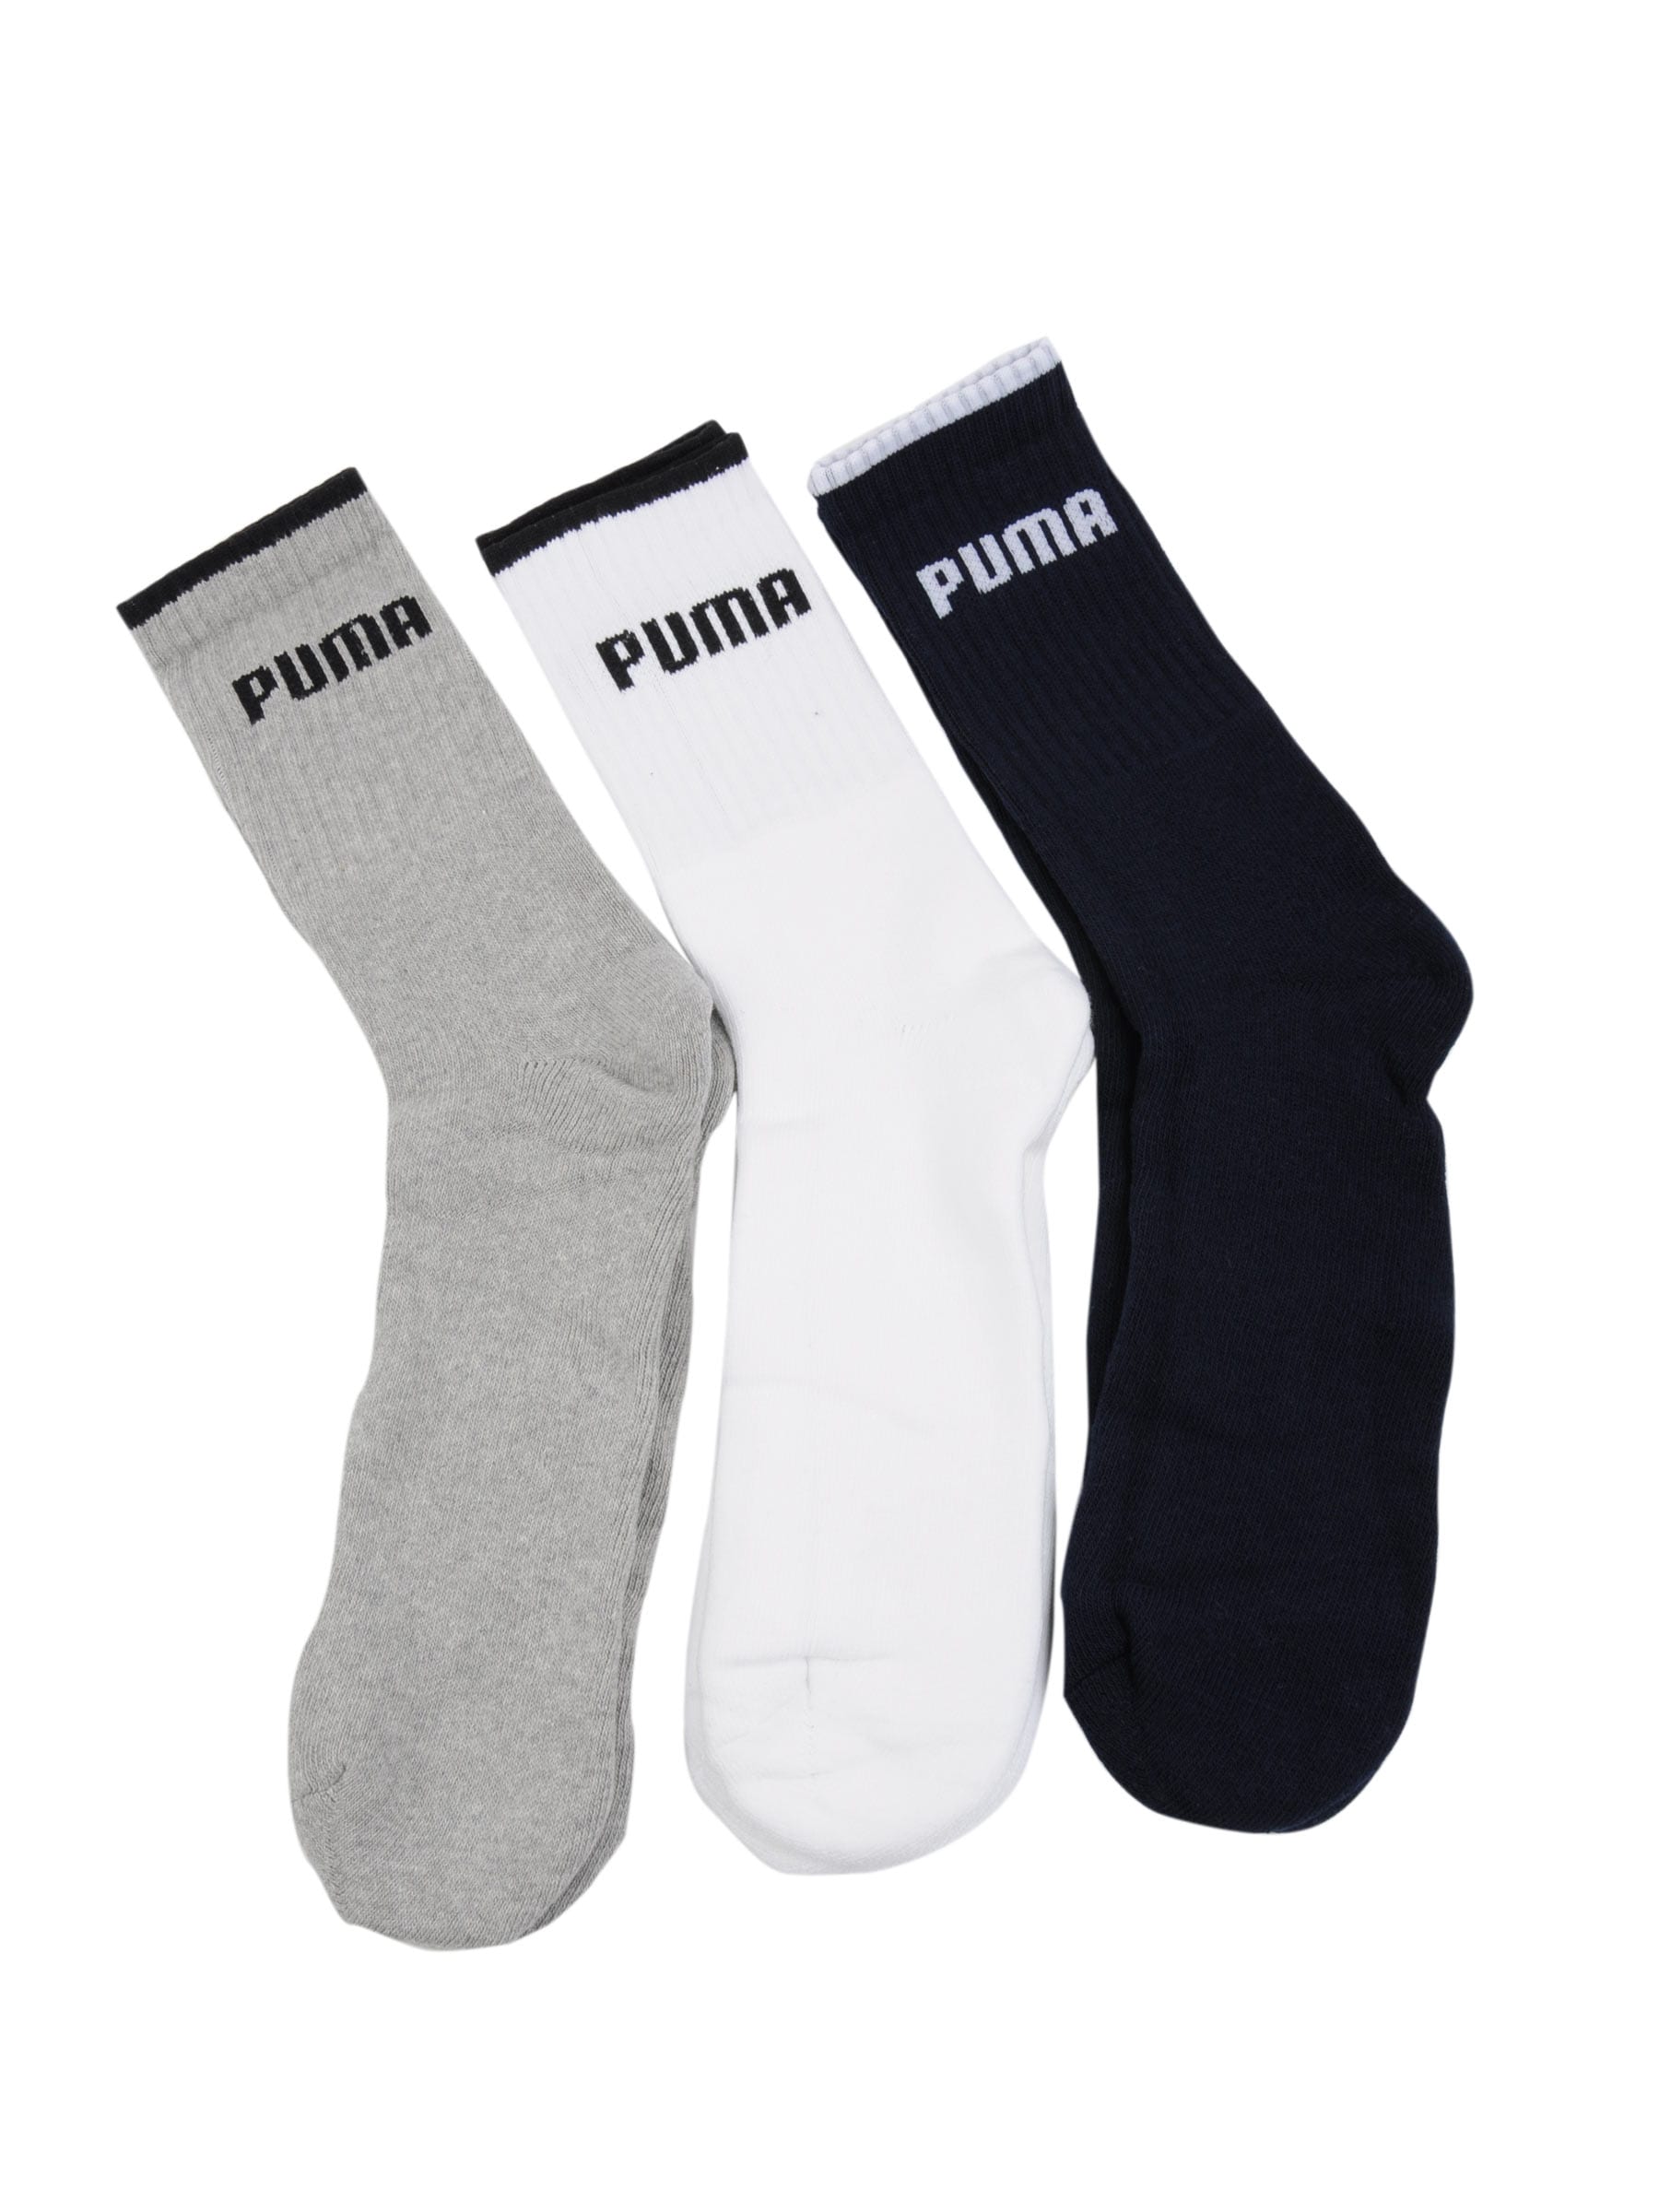 Puma Men Sport Pack of 3 Socks